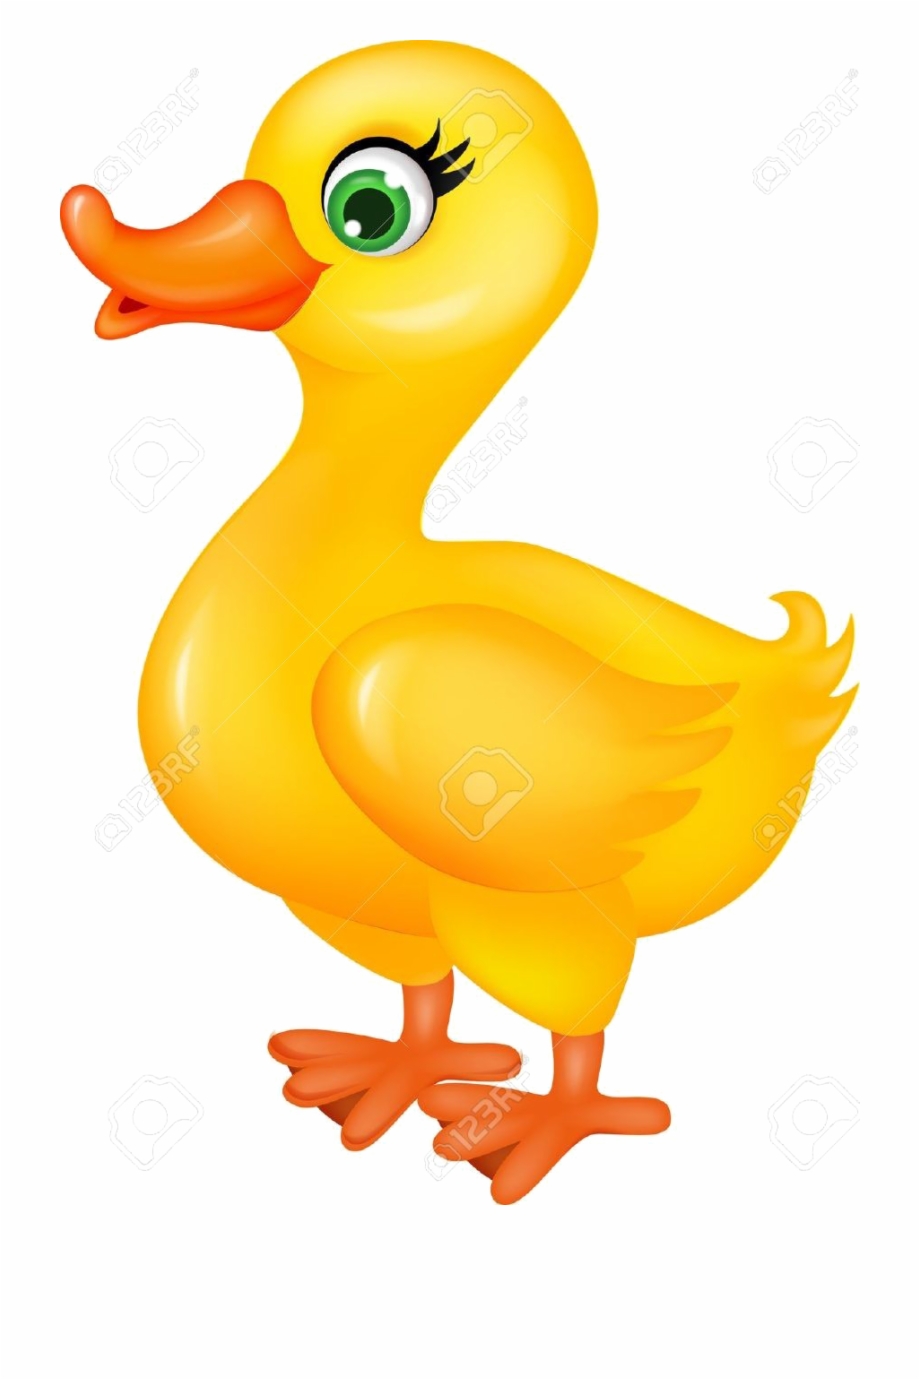 duck cartoon images hd
